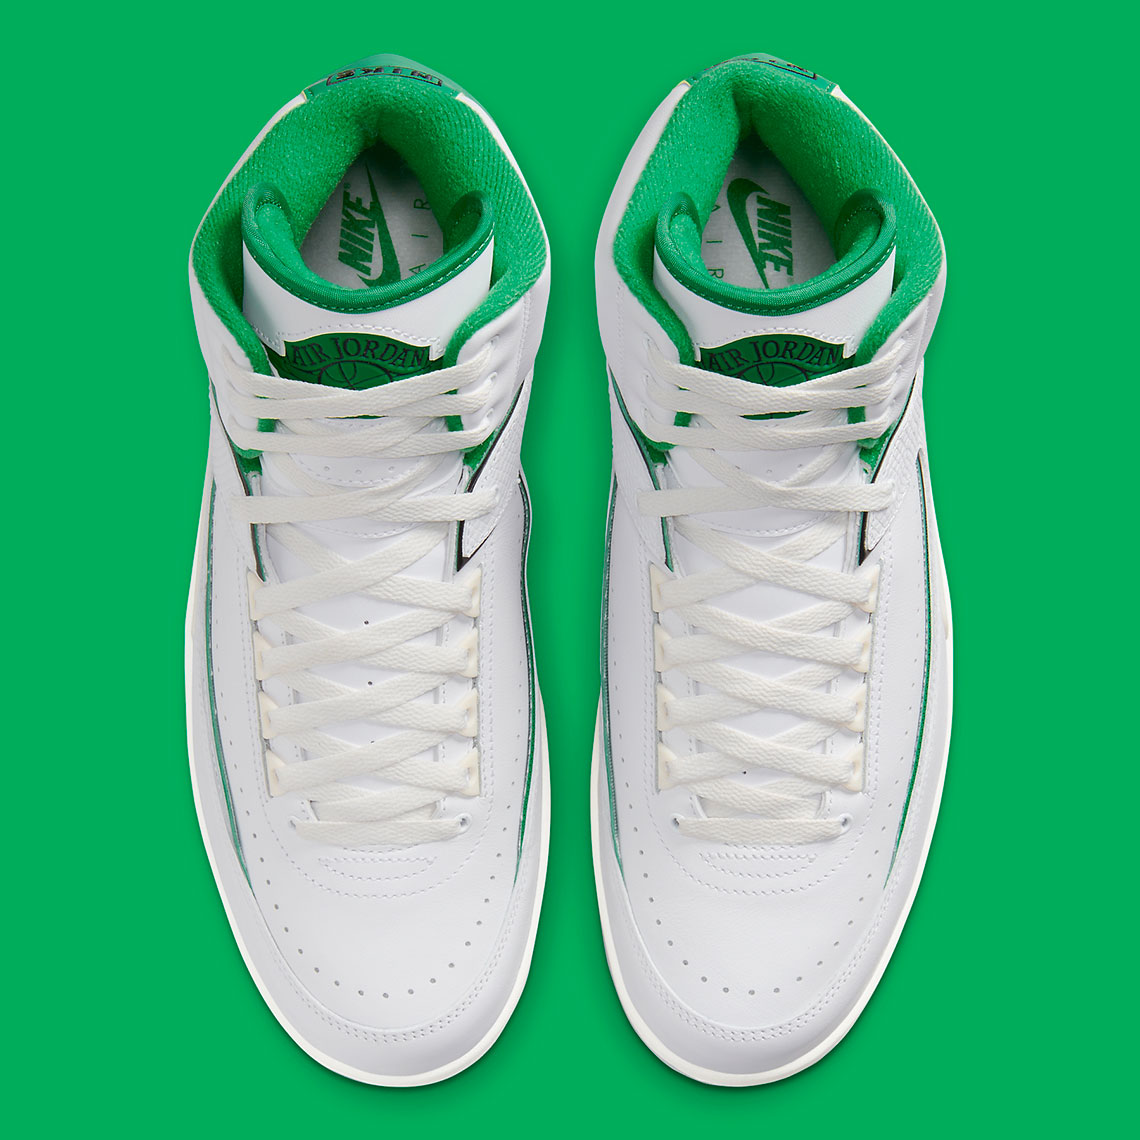 Jordan 13 Starfish Sneaker Tees Shirt Match White Crazy Hype Retro Lucky Green Dr8884 103 8